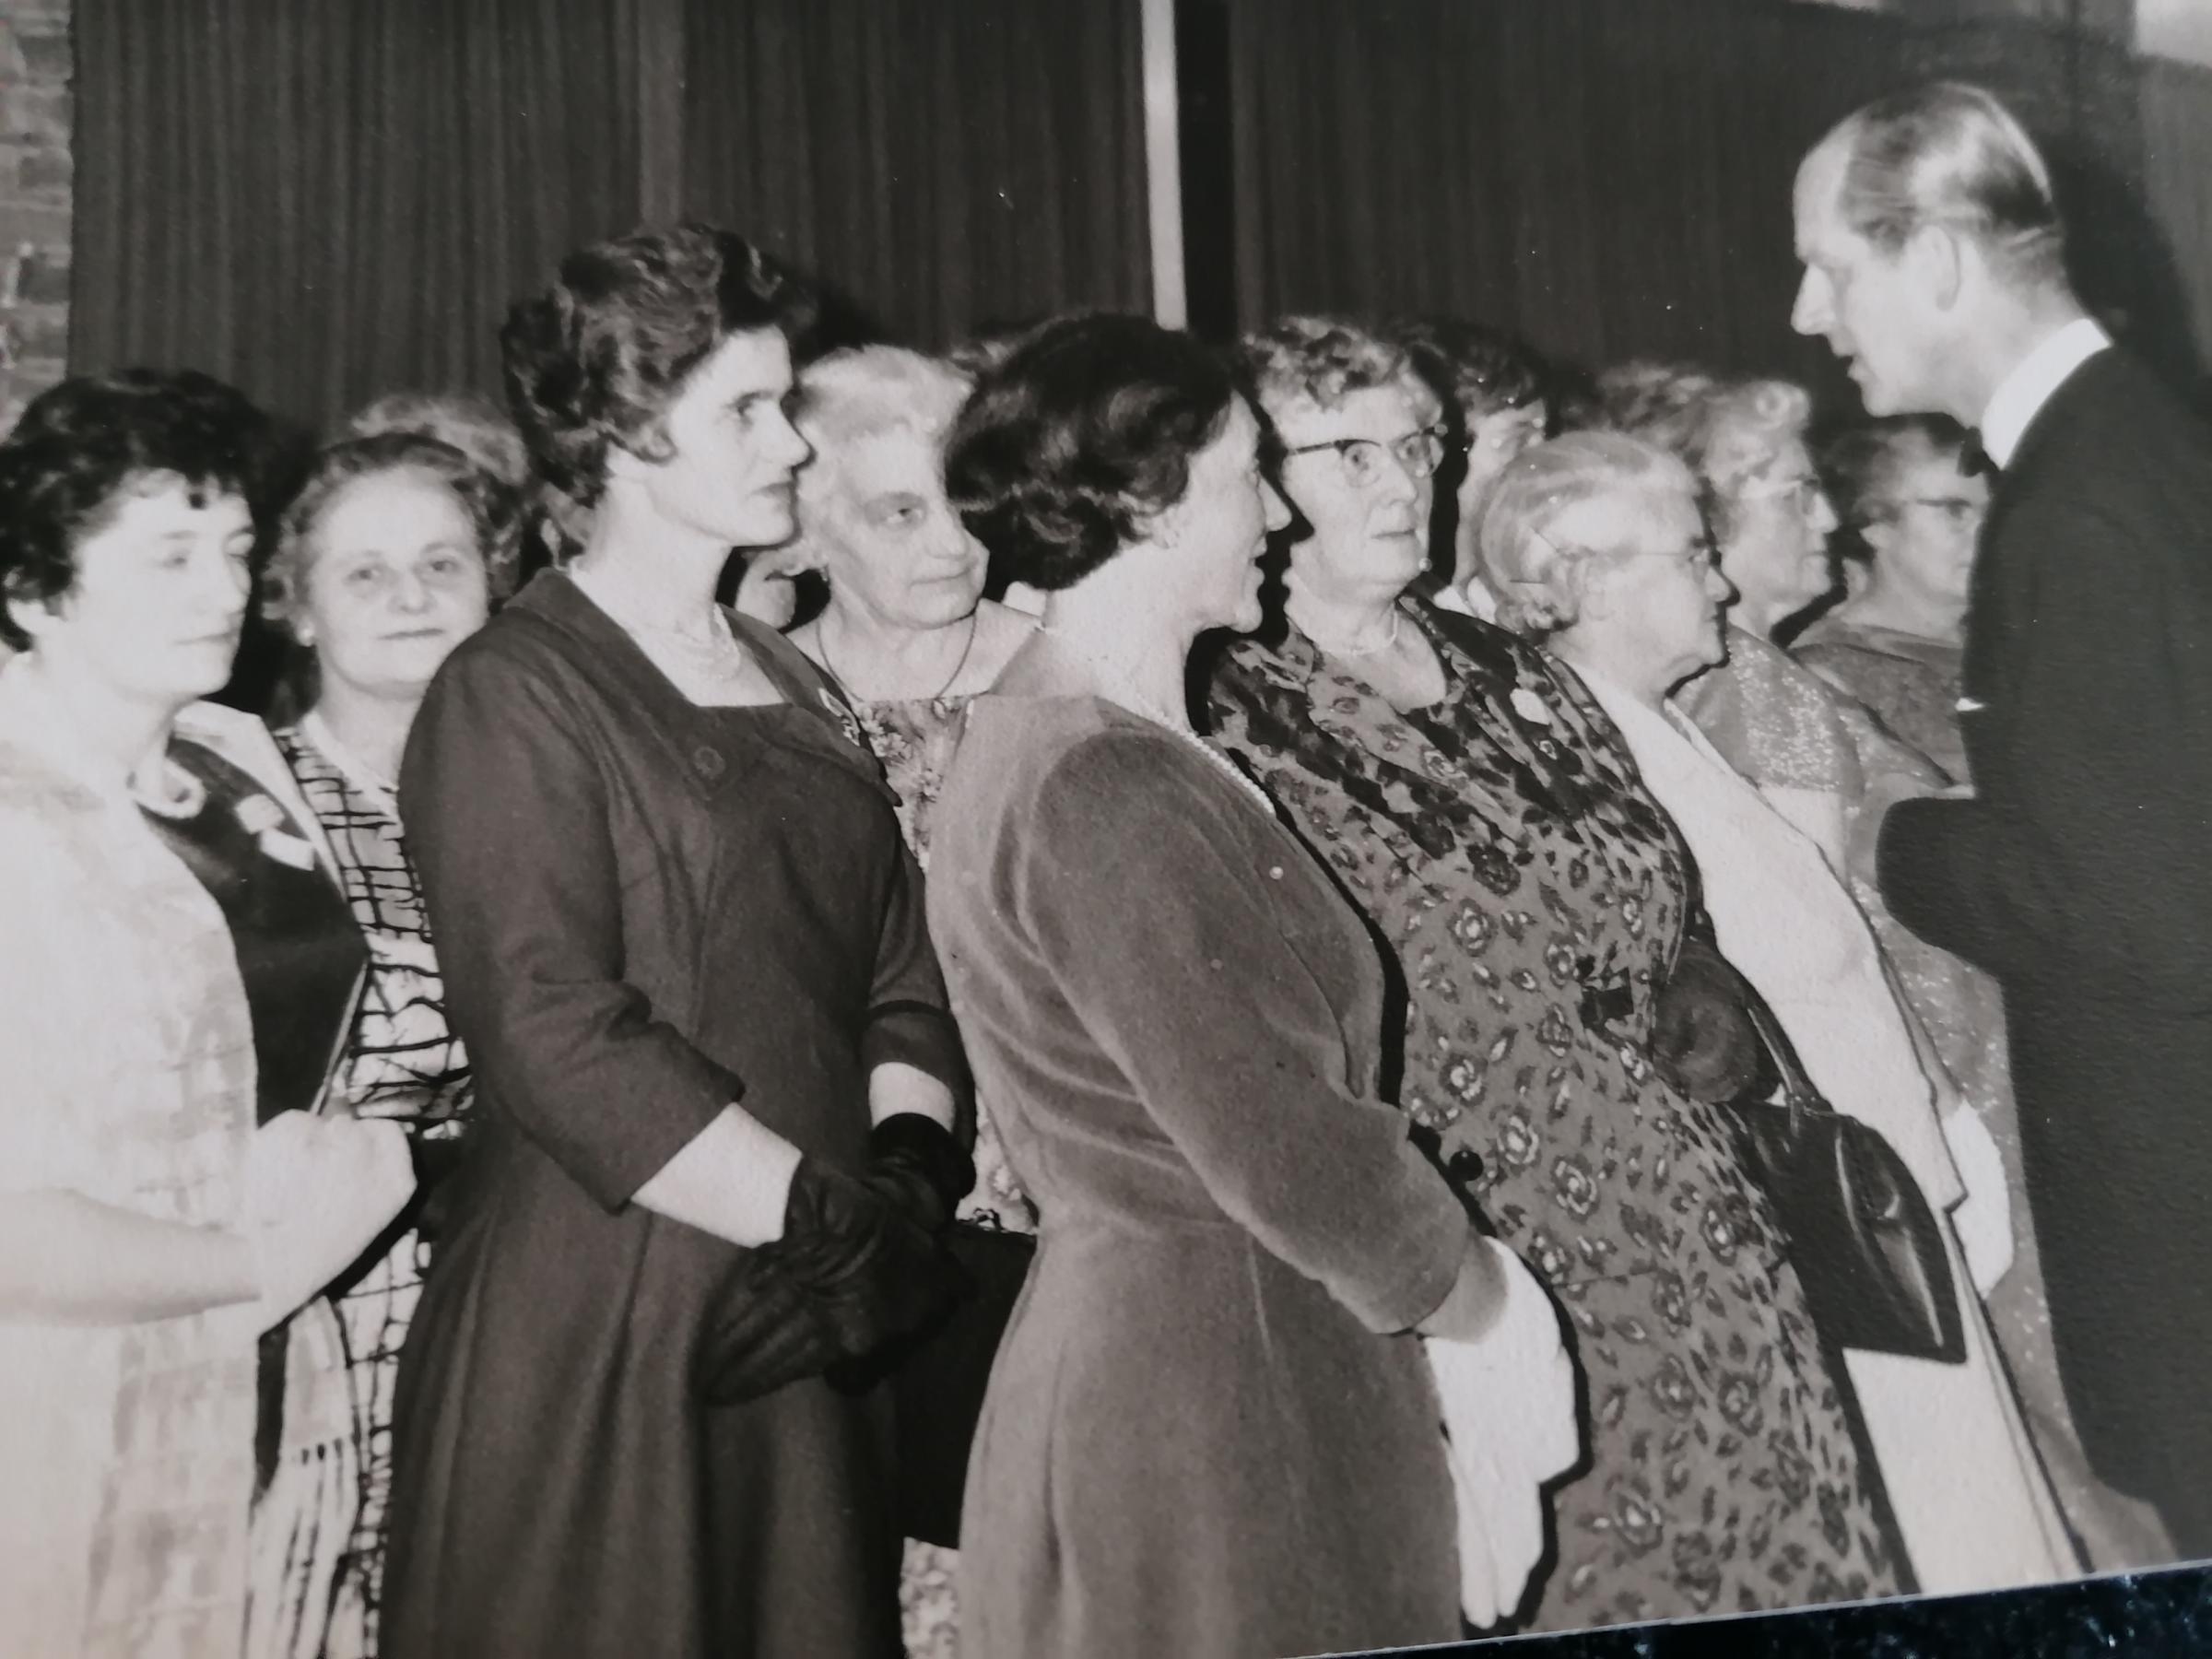 Prince Philip meeting the ladies of Peeblesshire SWRI in 1966. 